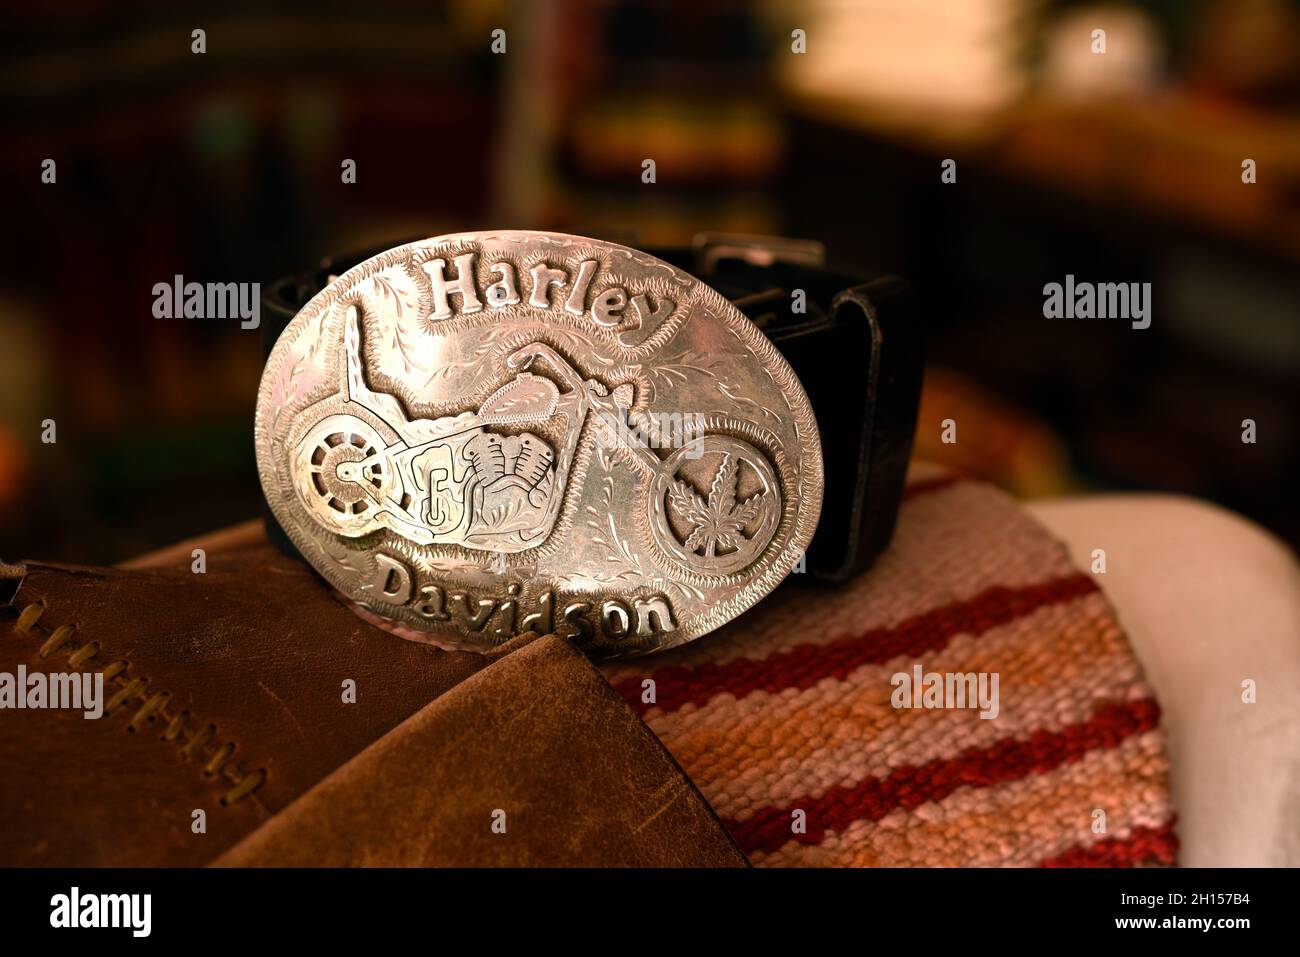 Harley davidson belt hi-res stock photography and images - Alamy